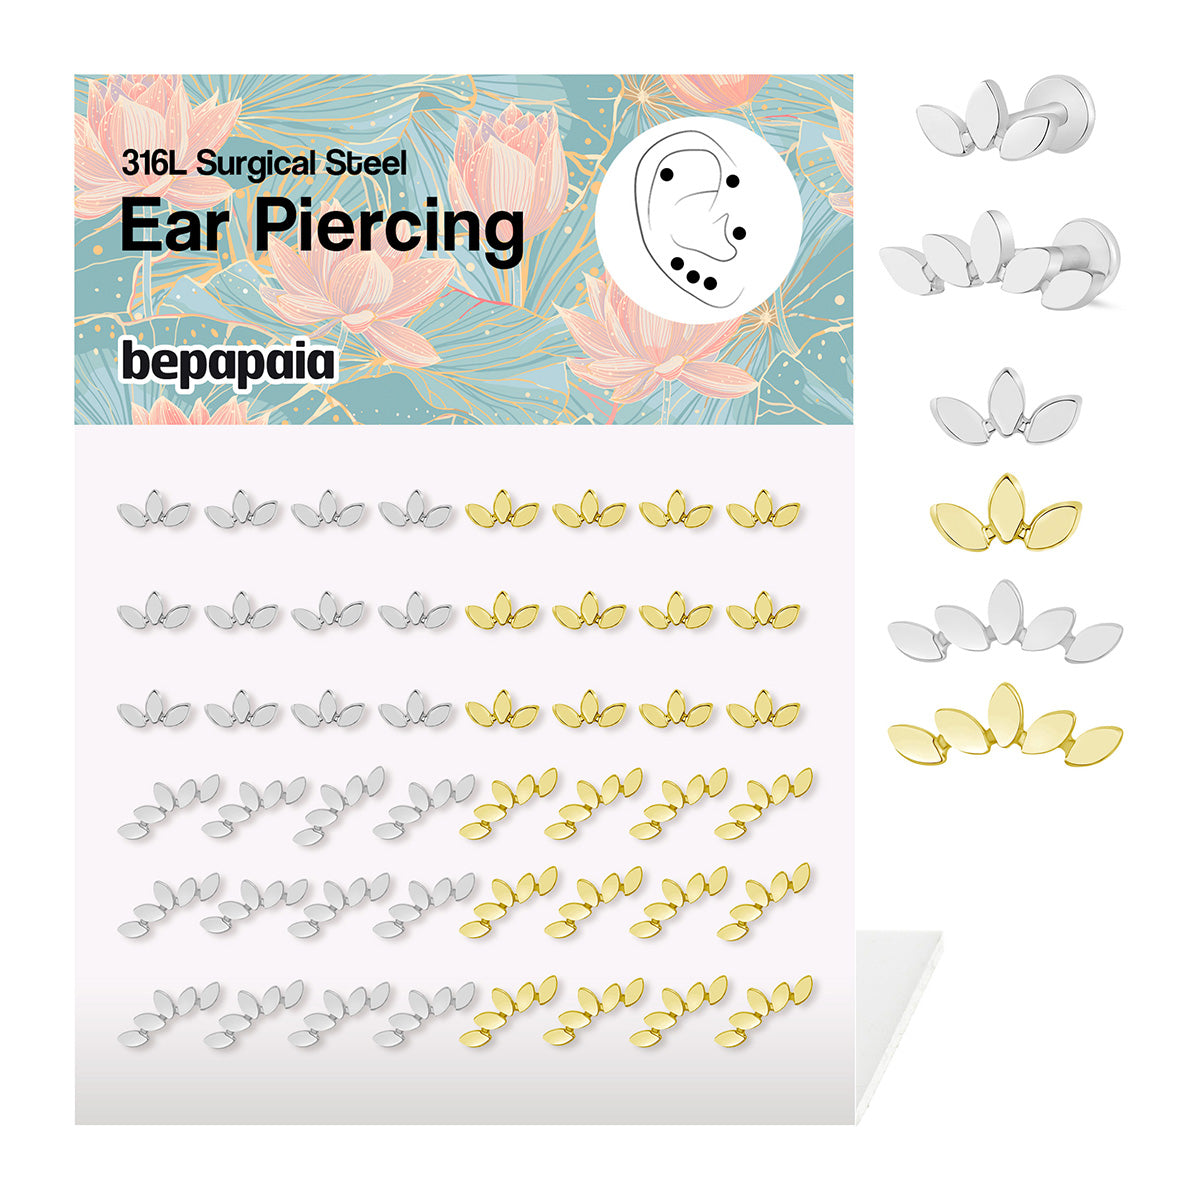 Ear piercing Lotus Flower 3 and 7 petals